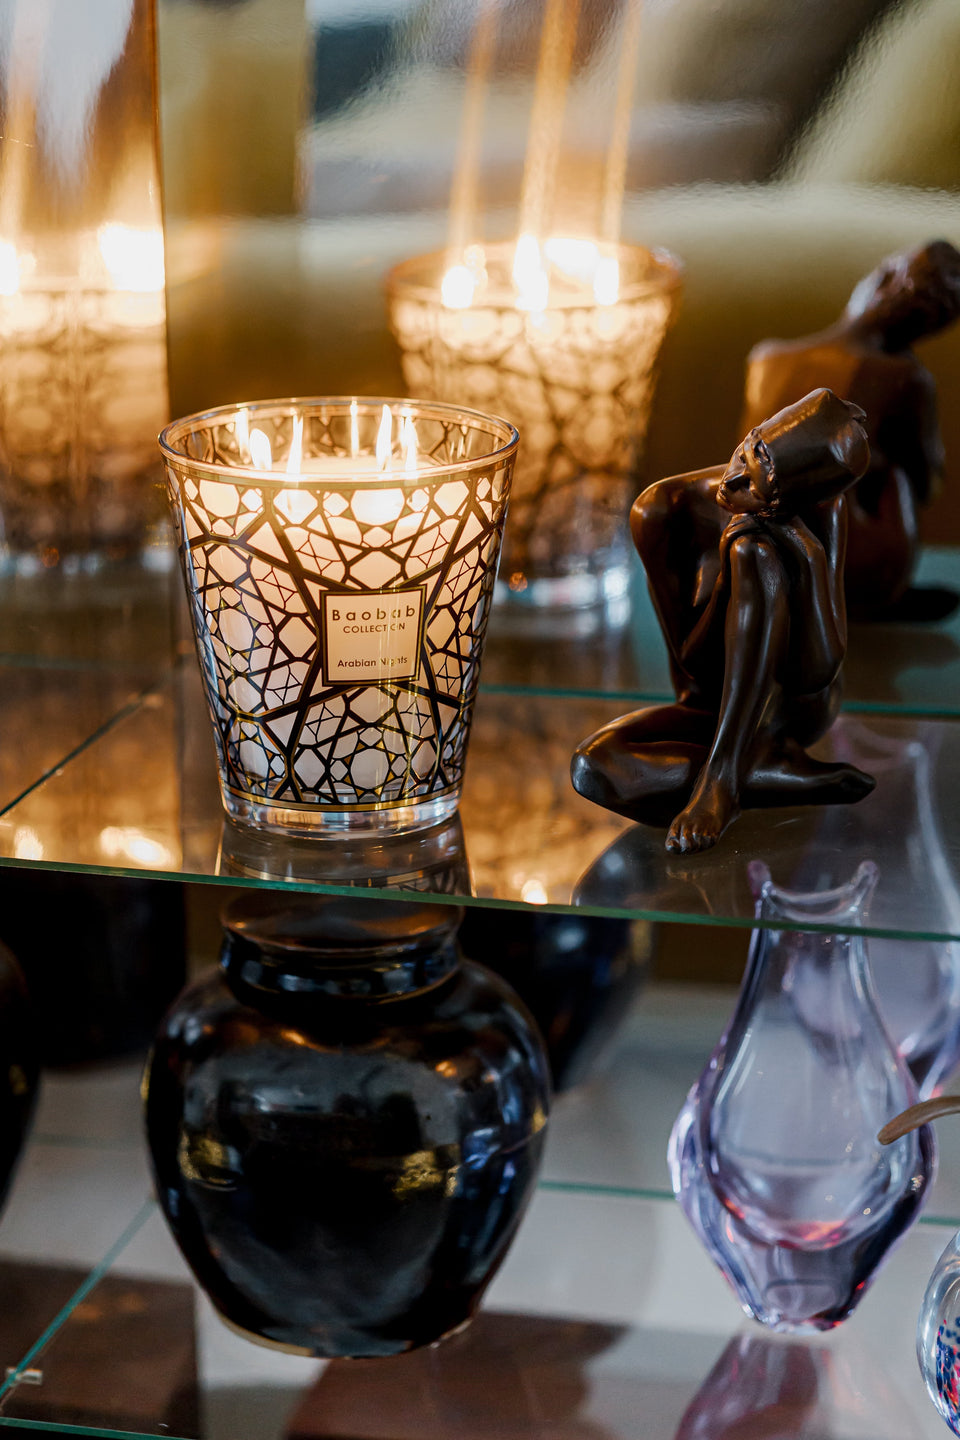 Baobab Collection "Arabian Nights" žvakė